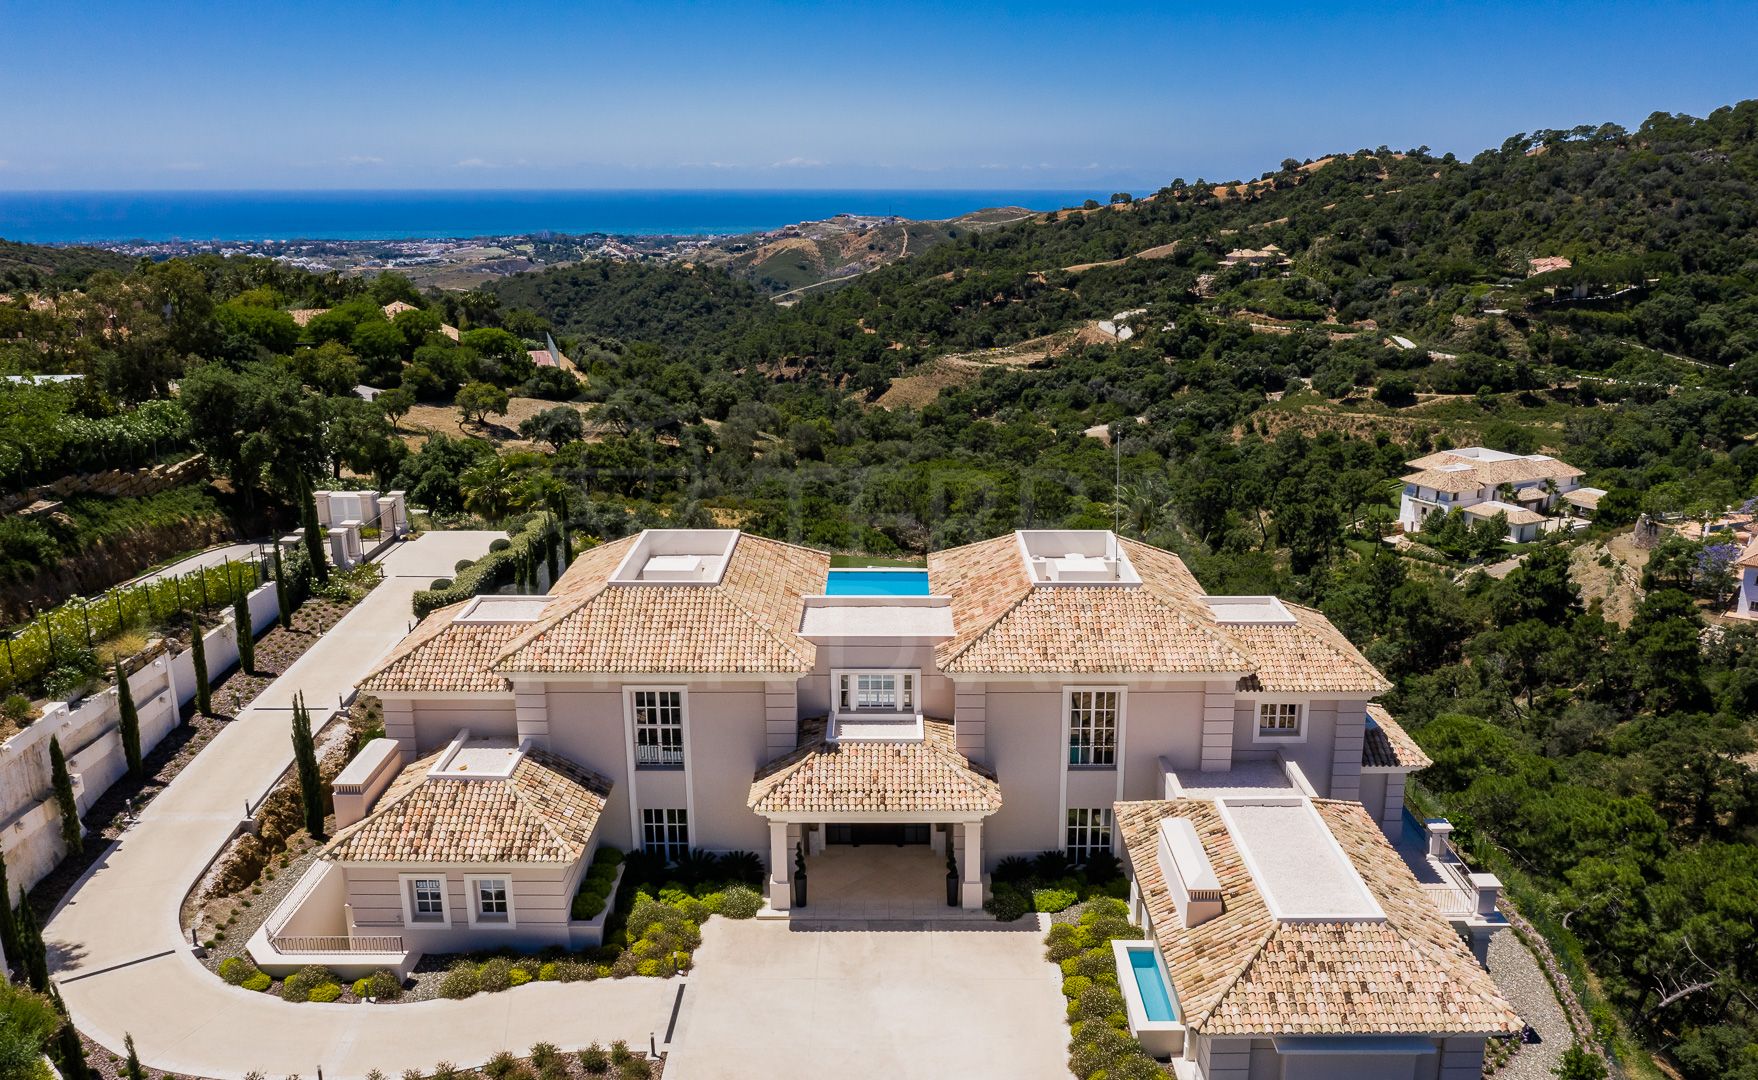 Elegante y lujosa villa con vistas panoramicas al mar se vende en La Zagaleta, Benahavis